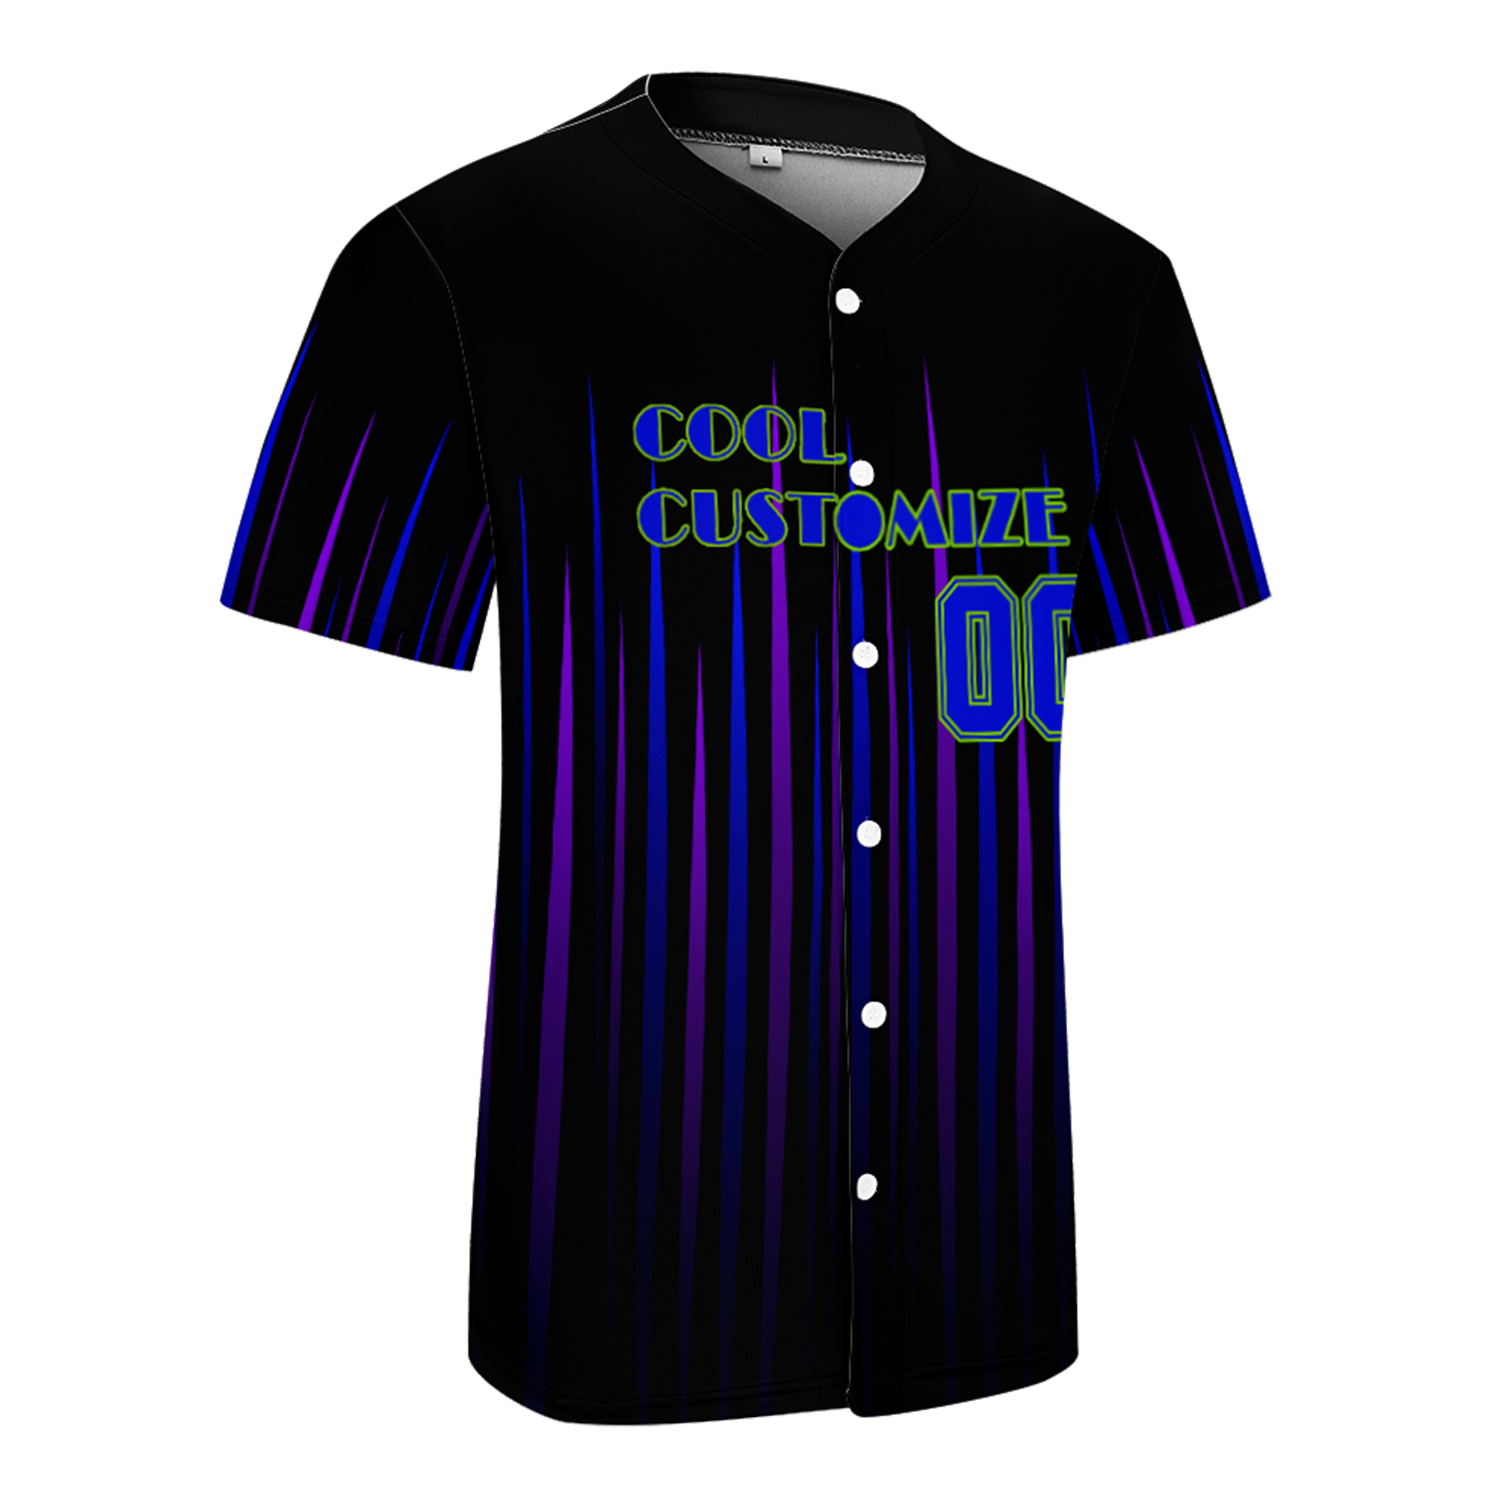 factory-custom-baseball-shirt-personalized-design-jerseys-oem-print-on-demand-baseball-suits-6